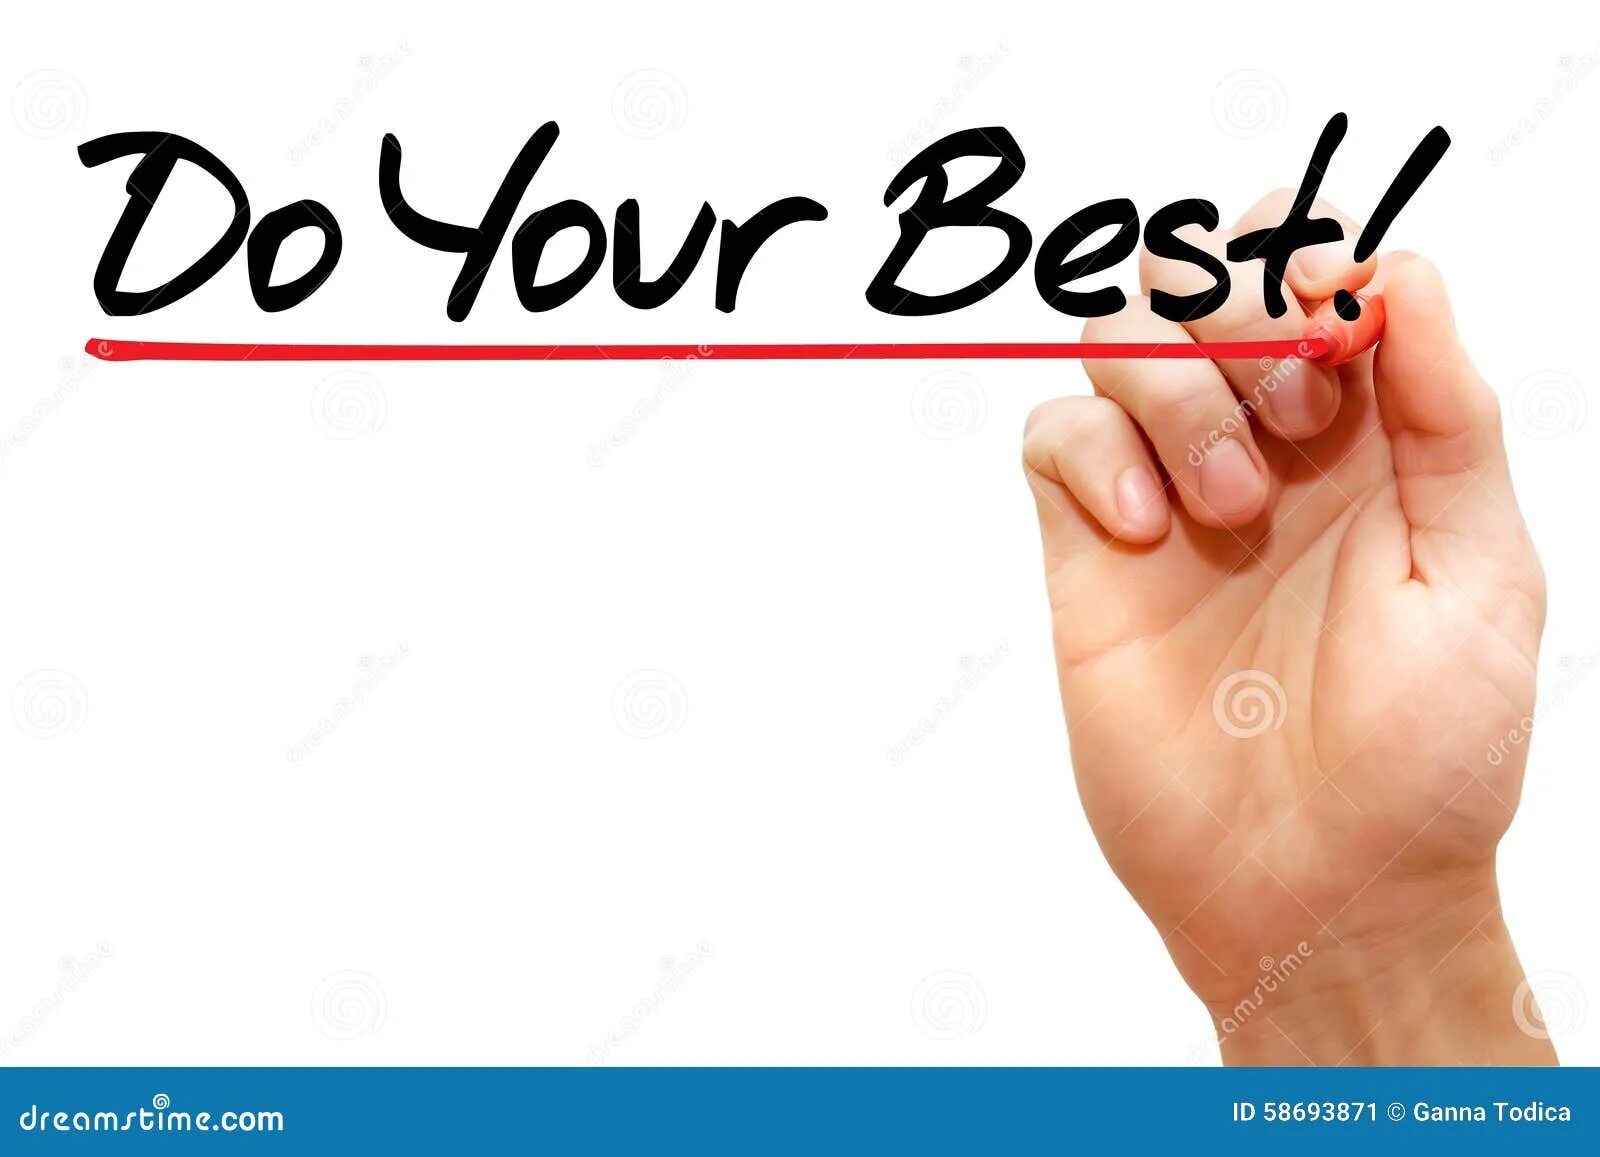 Do your best. Your the best. Try your best. Try your best picture на белом фоне. Always do your best